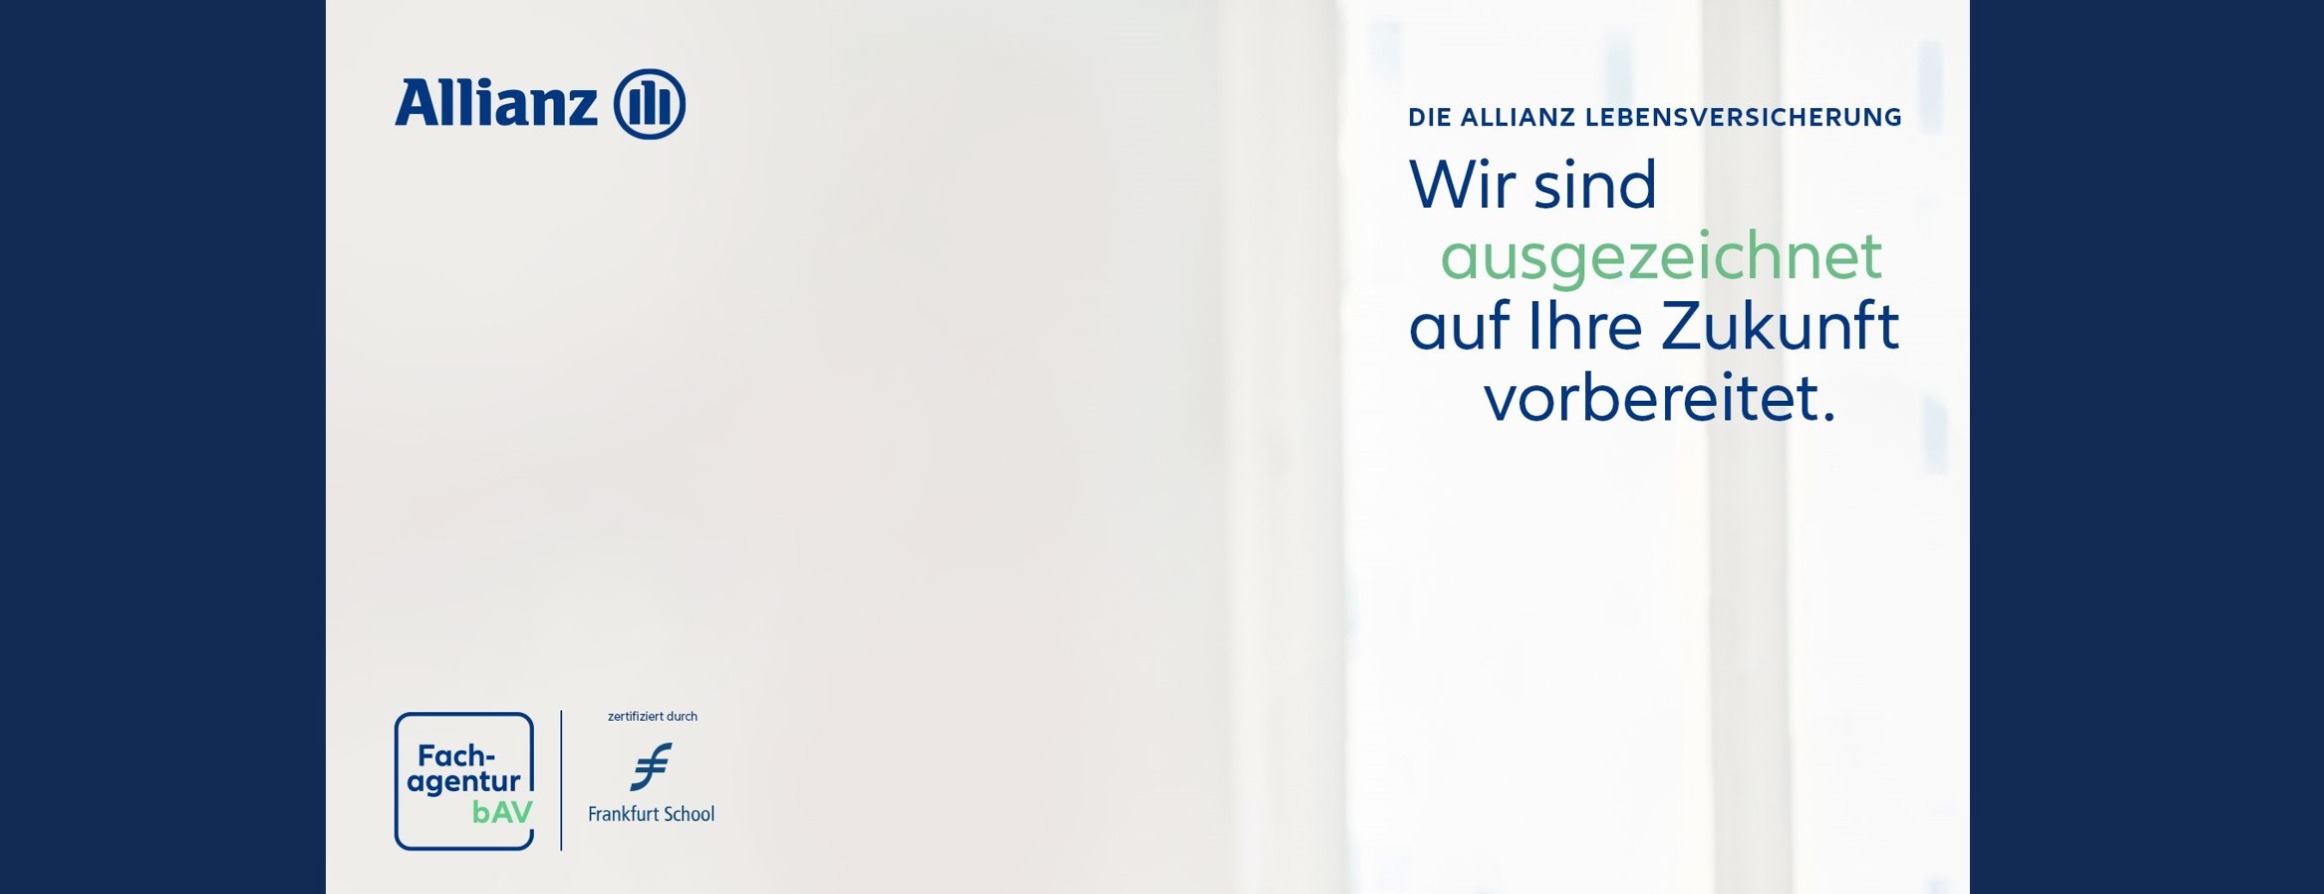 Allianz Versicherung Christian Markgraf München - bAV Firmen Altersvorsorge zertifiziert 